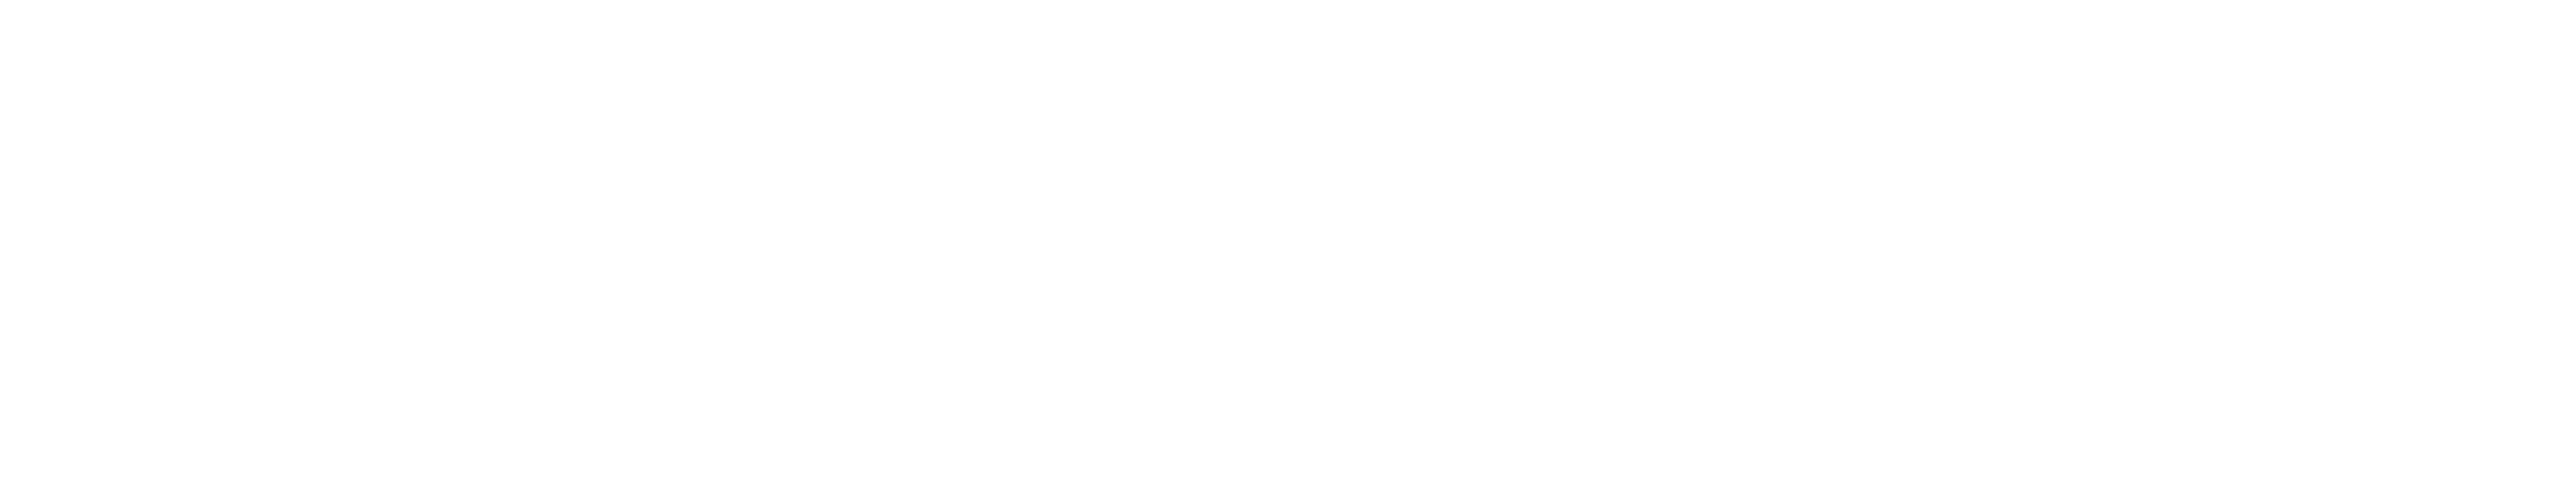 FL3XX-White-Logo (1)